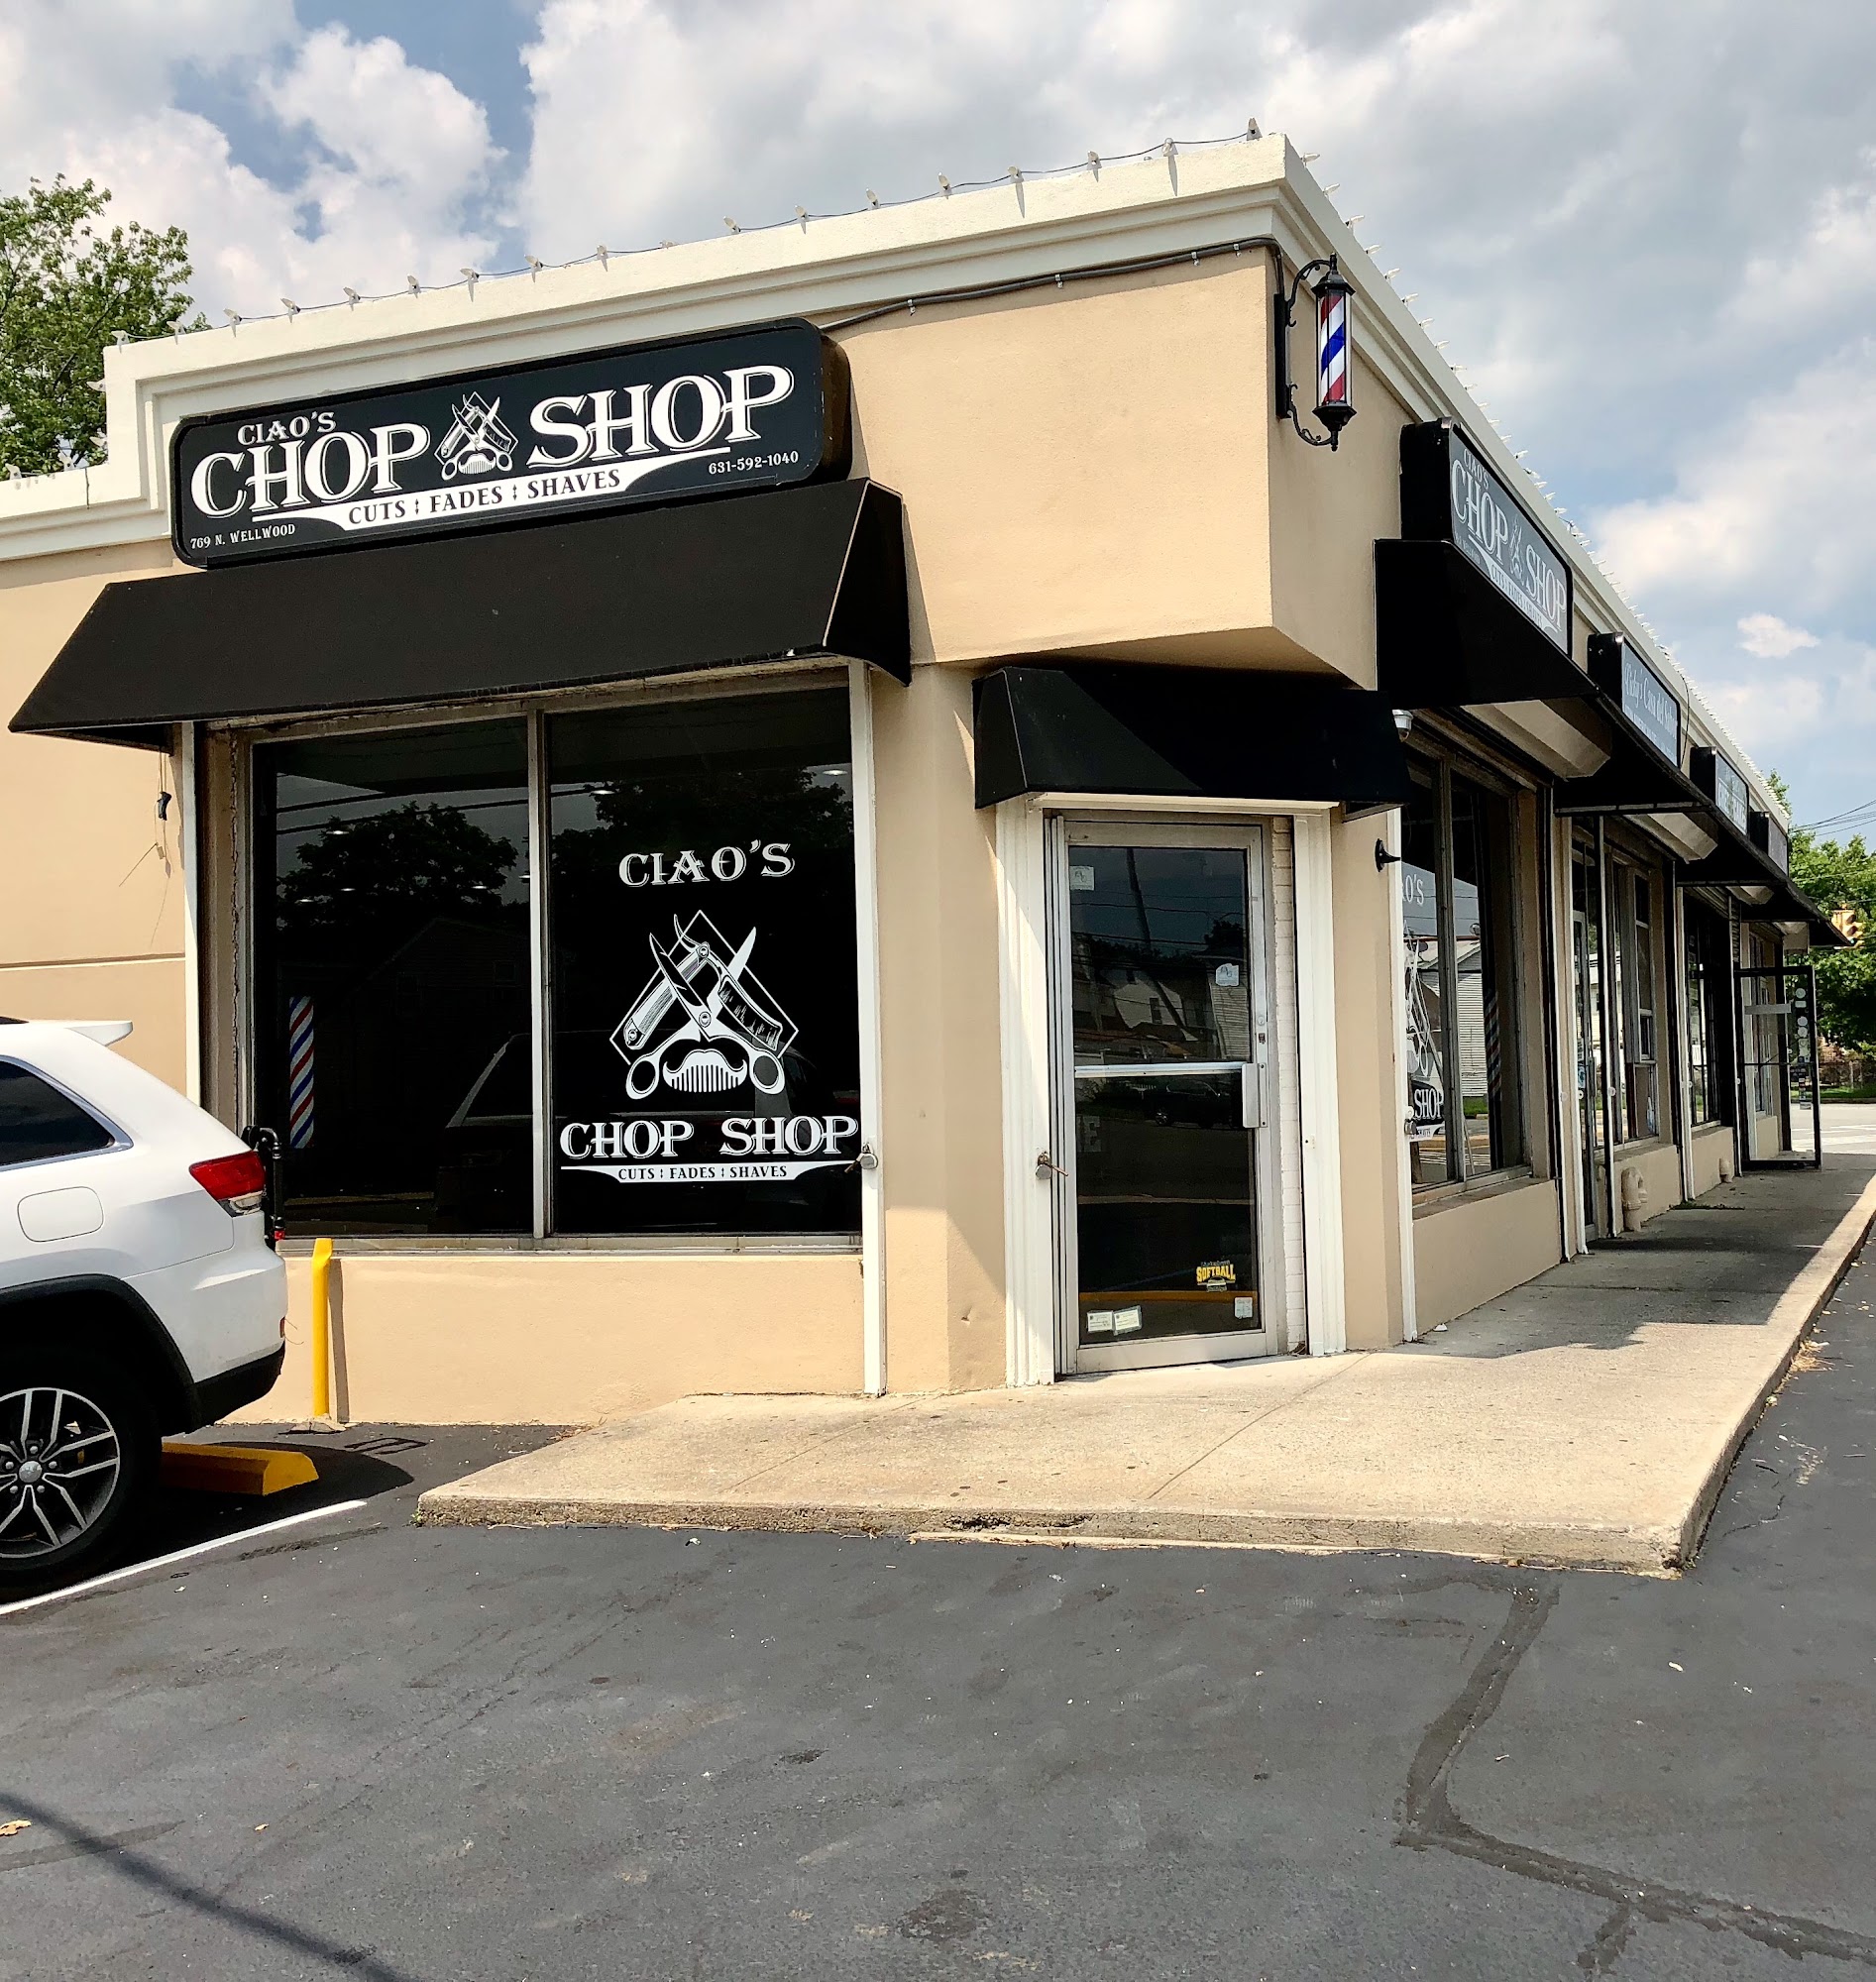 Ciao’s Chop shop